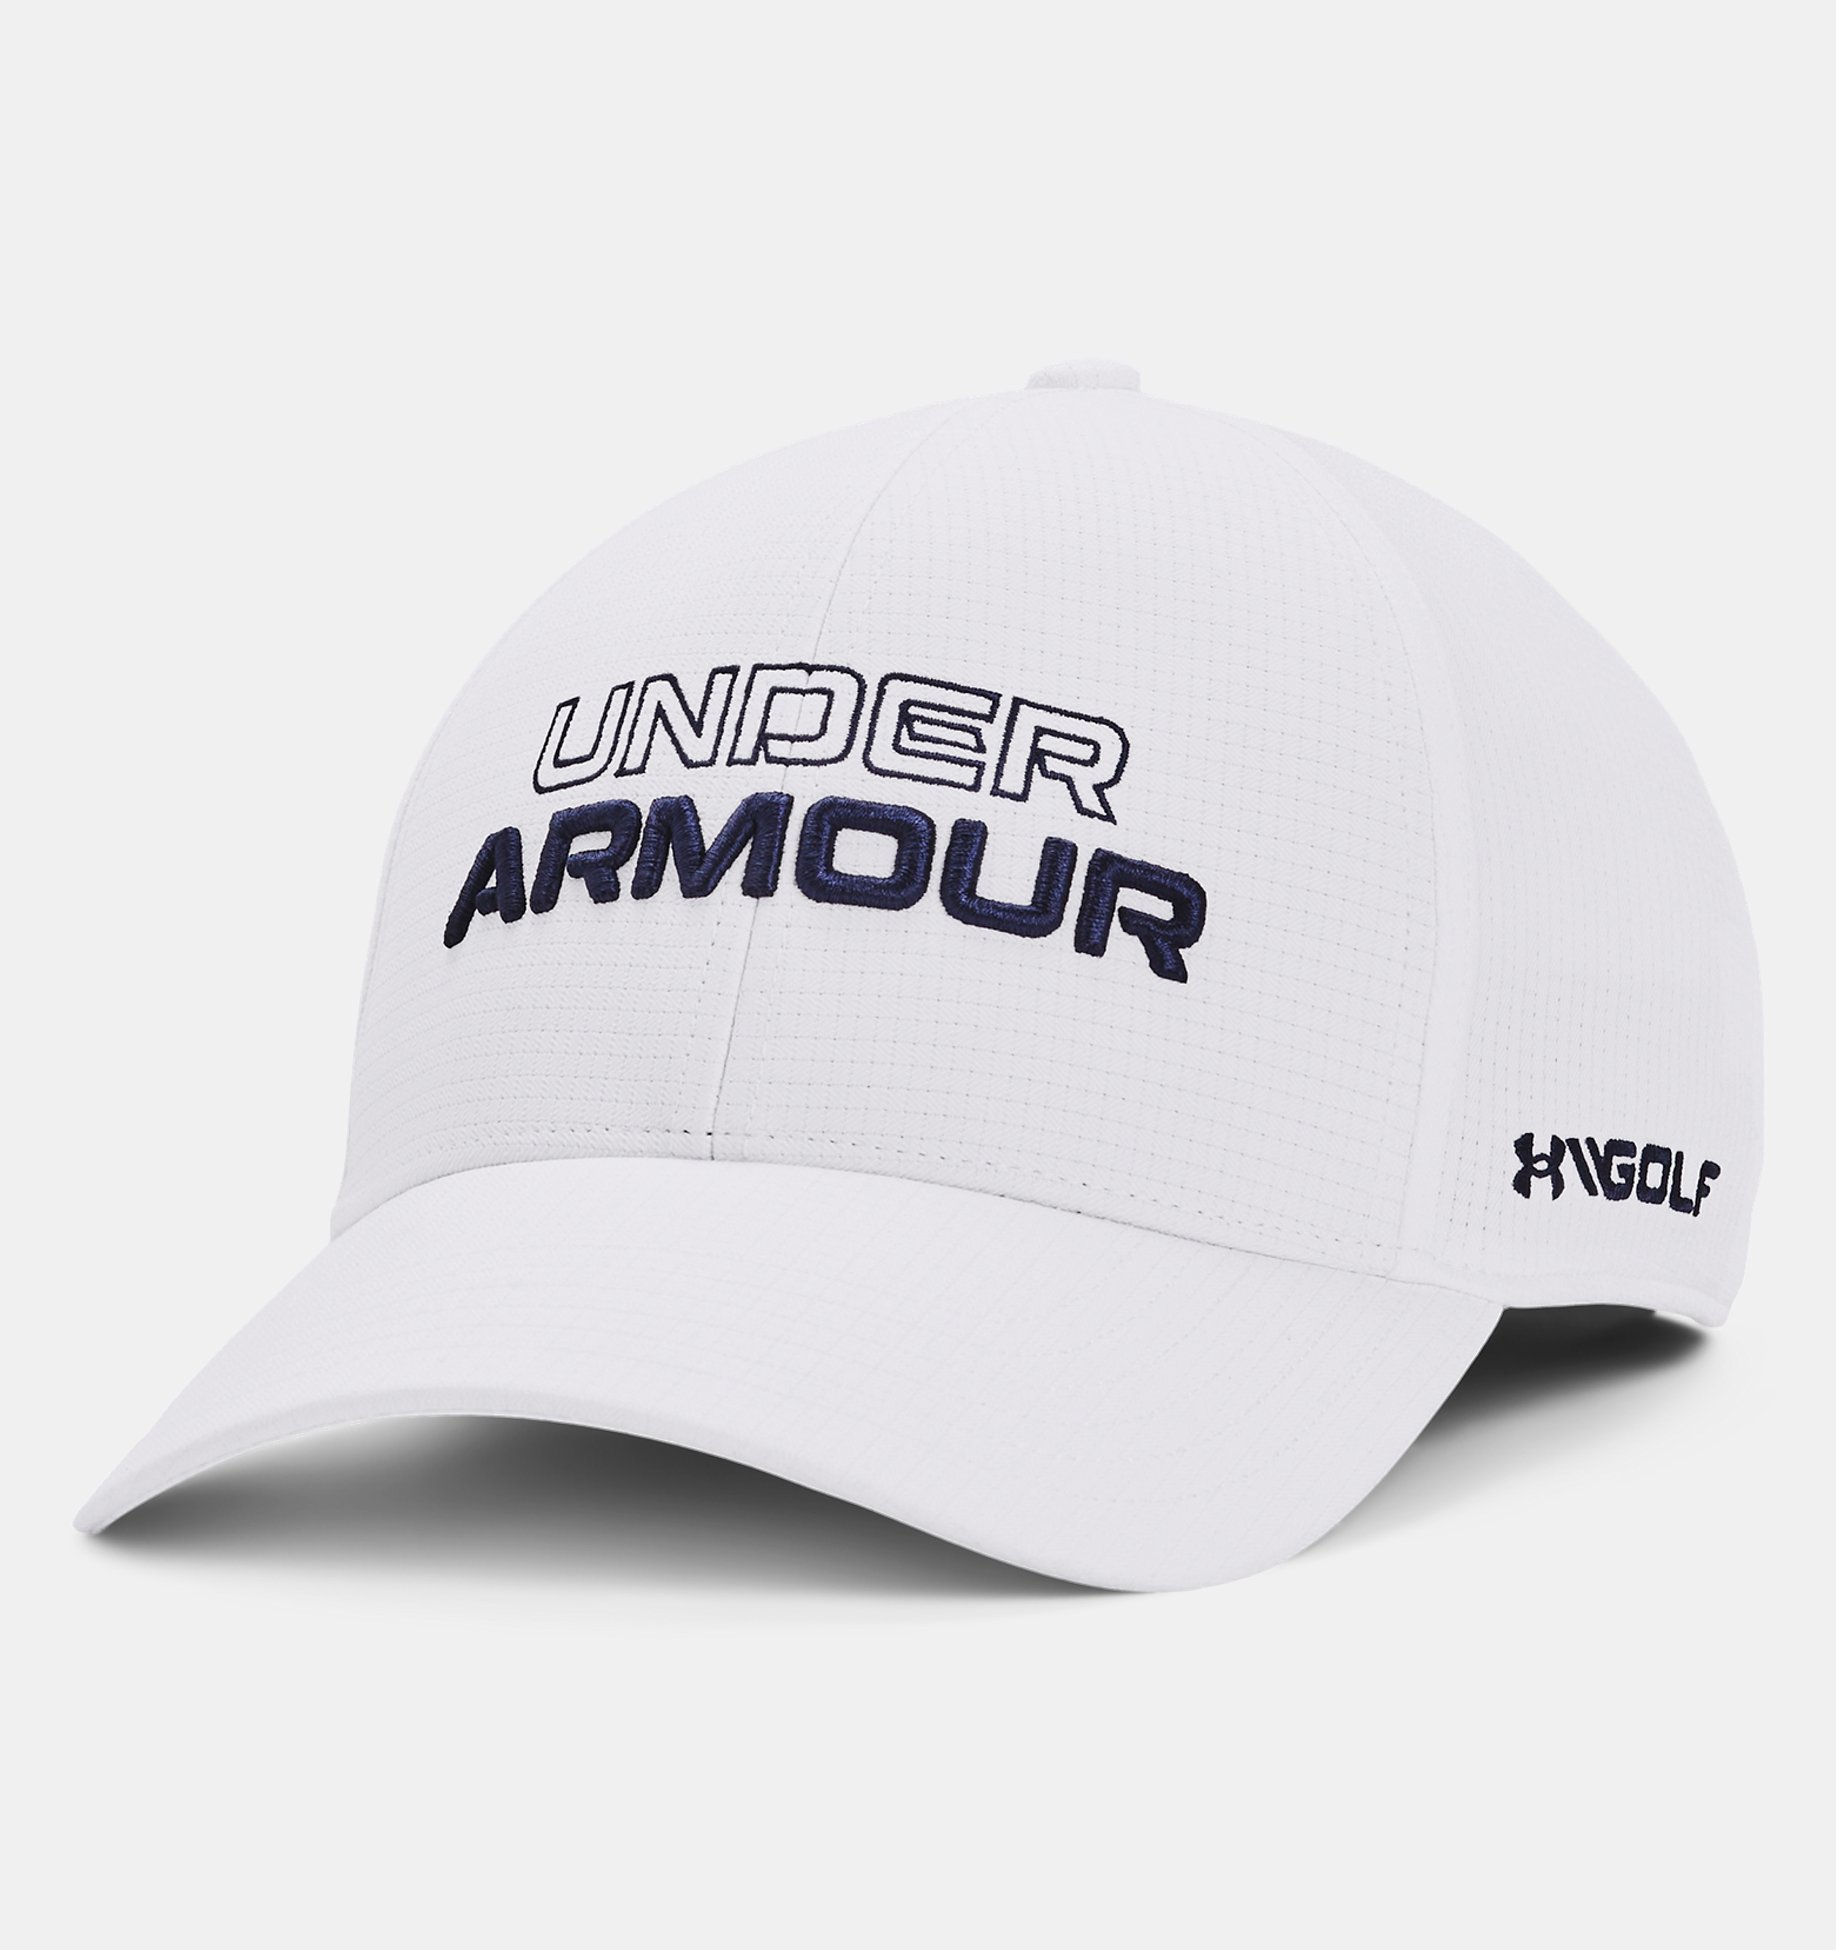 Men's UA Jordan Spieth Golf Hat Under Armour